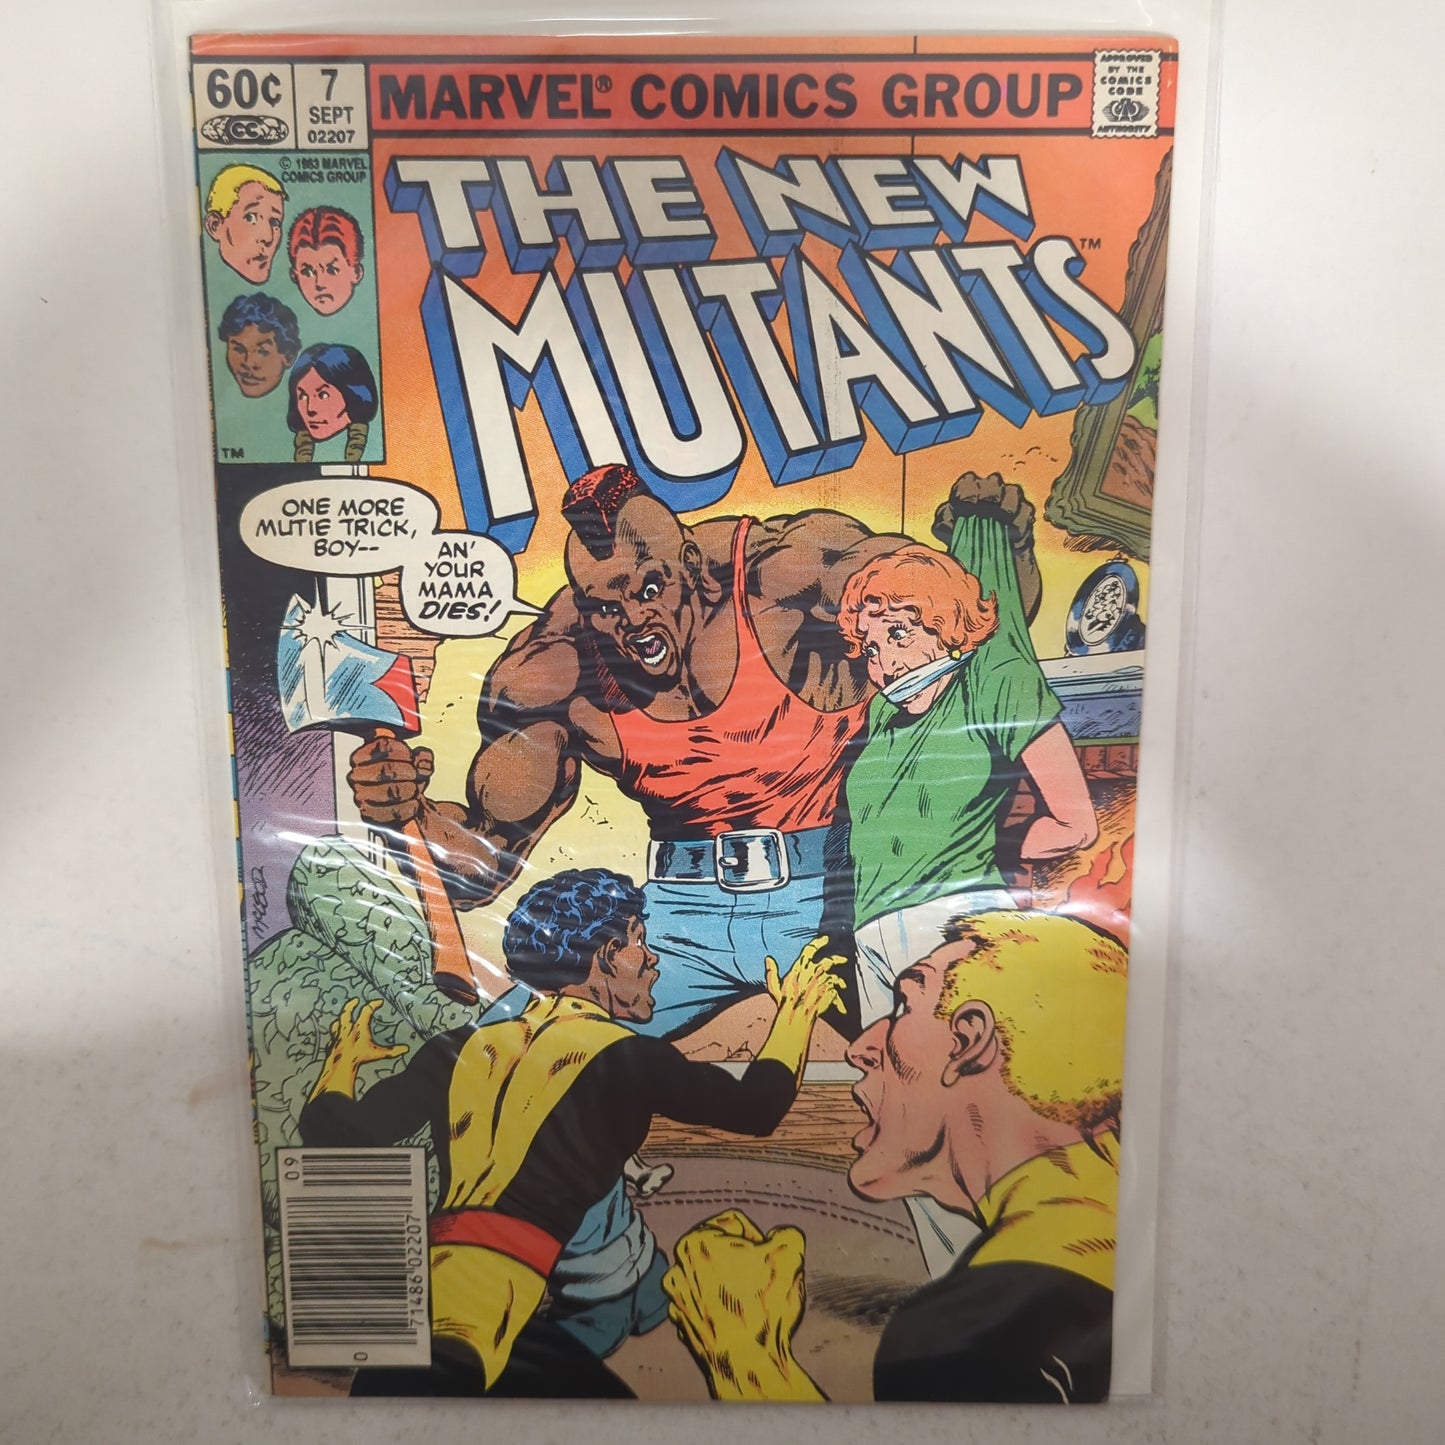 The New Mutants #7 Newsstand